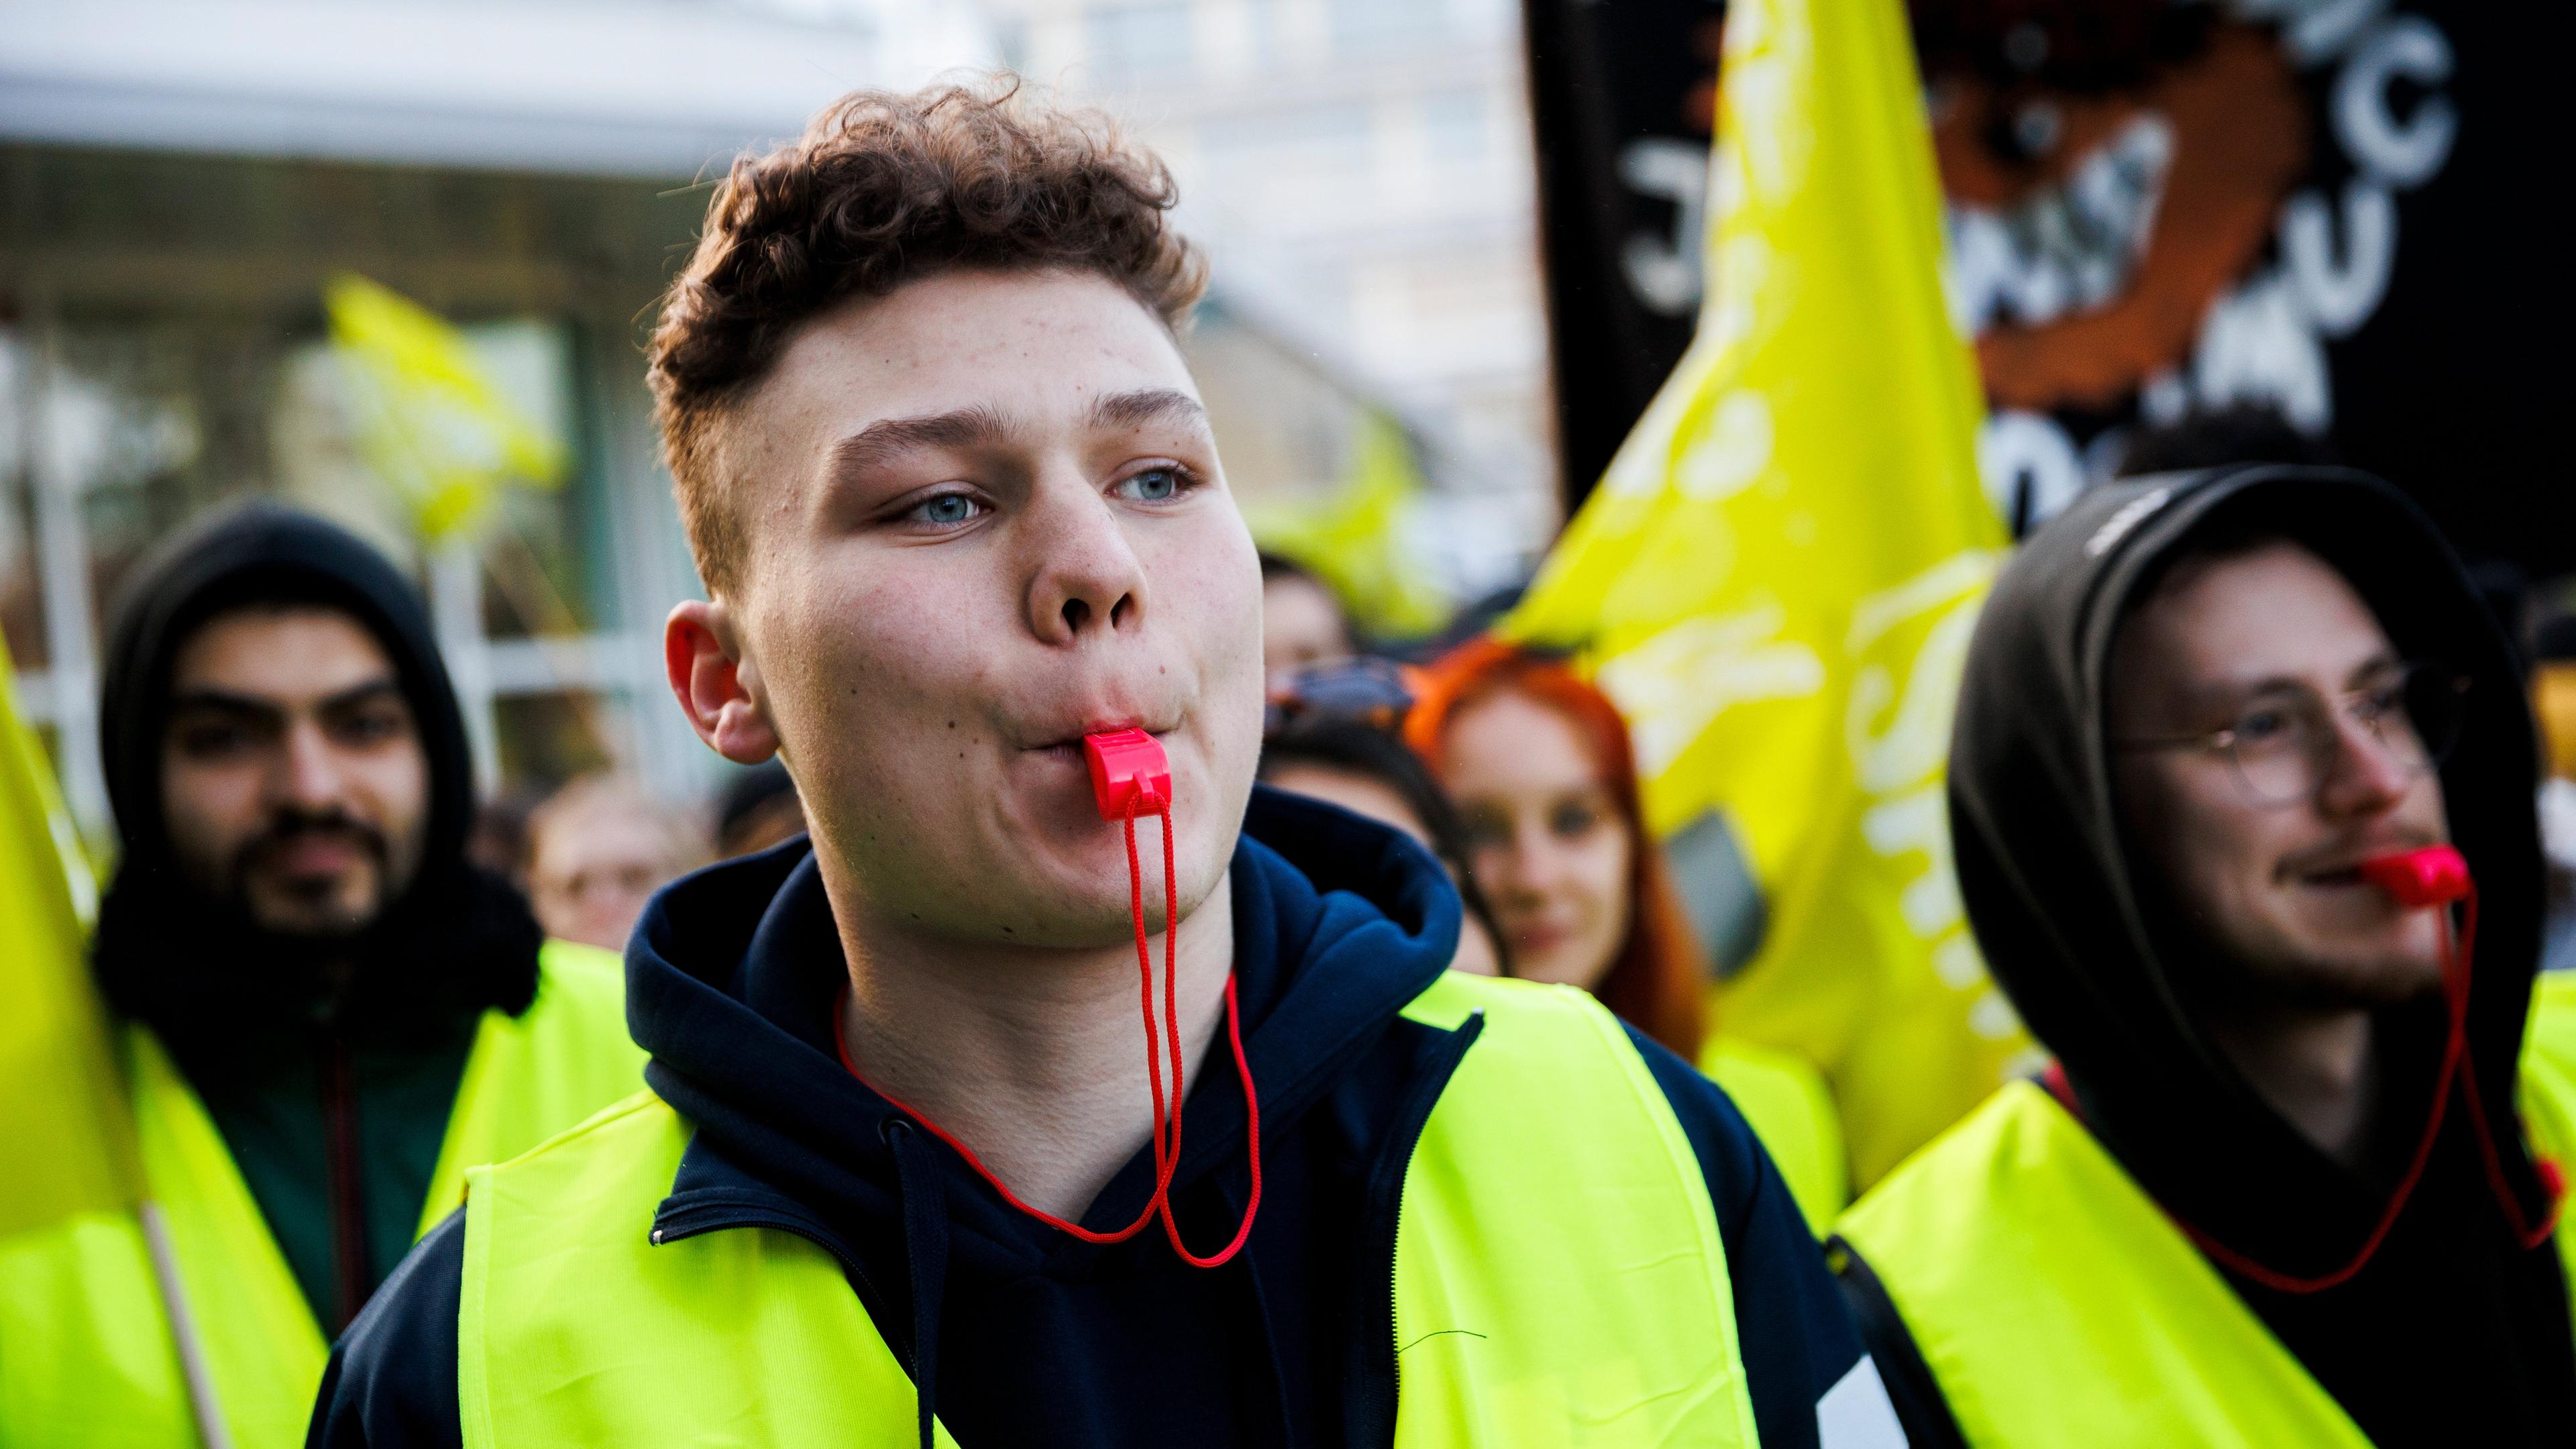 Menschen in gelben Westen demonstrieren in Potsdam